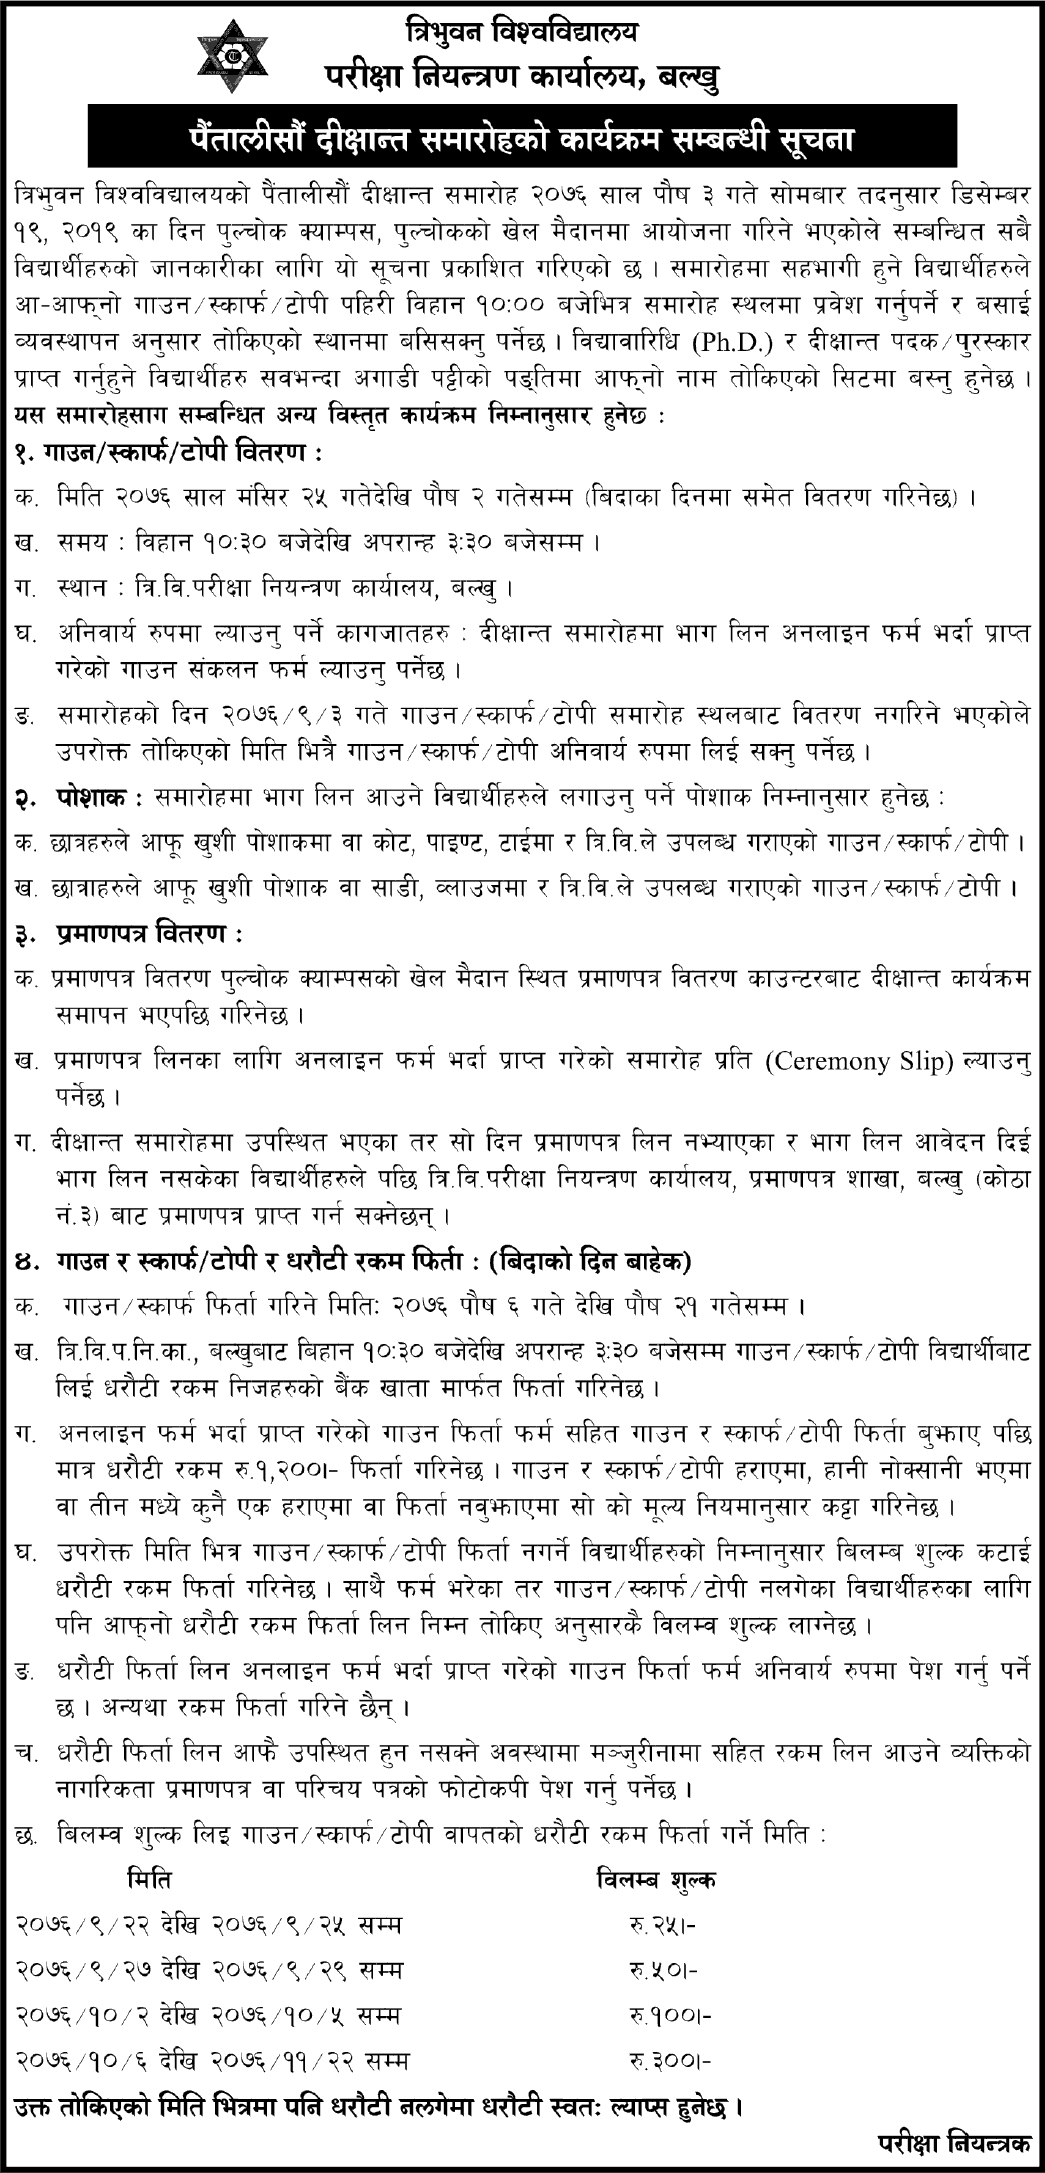 45th Convocation Programs Schedule of Tribhuvan University